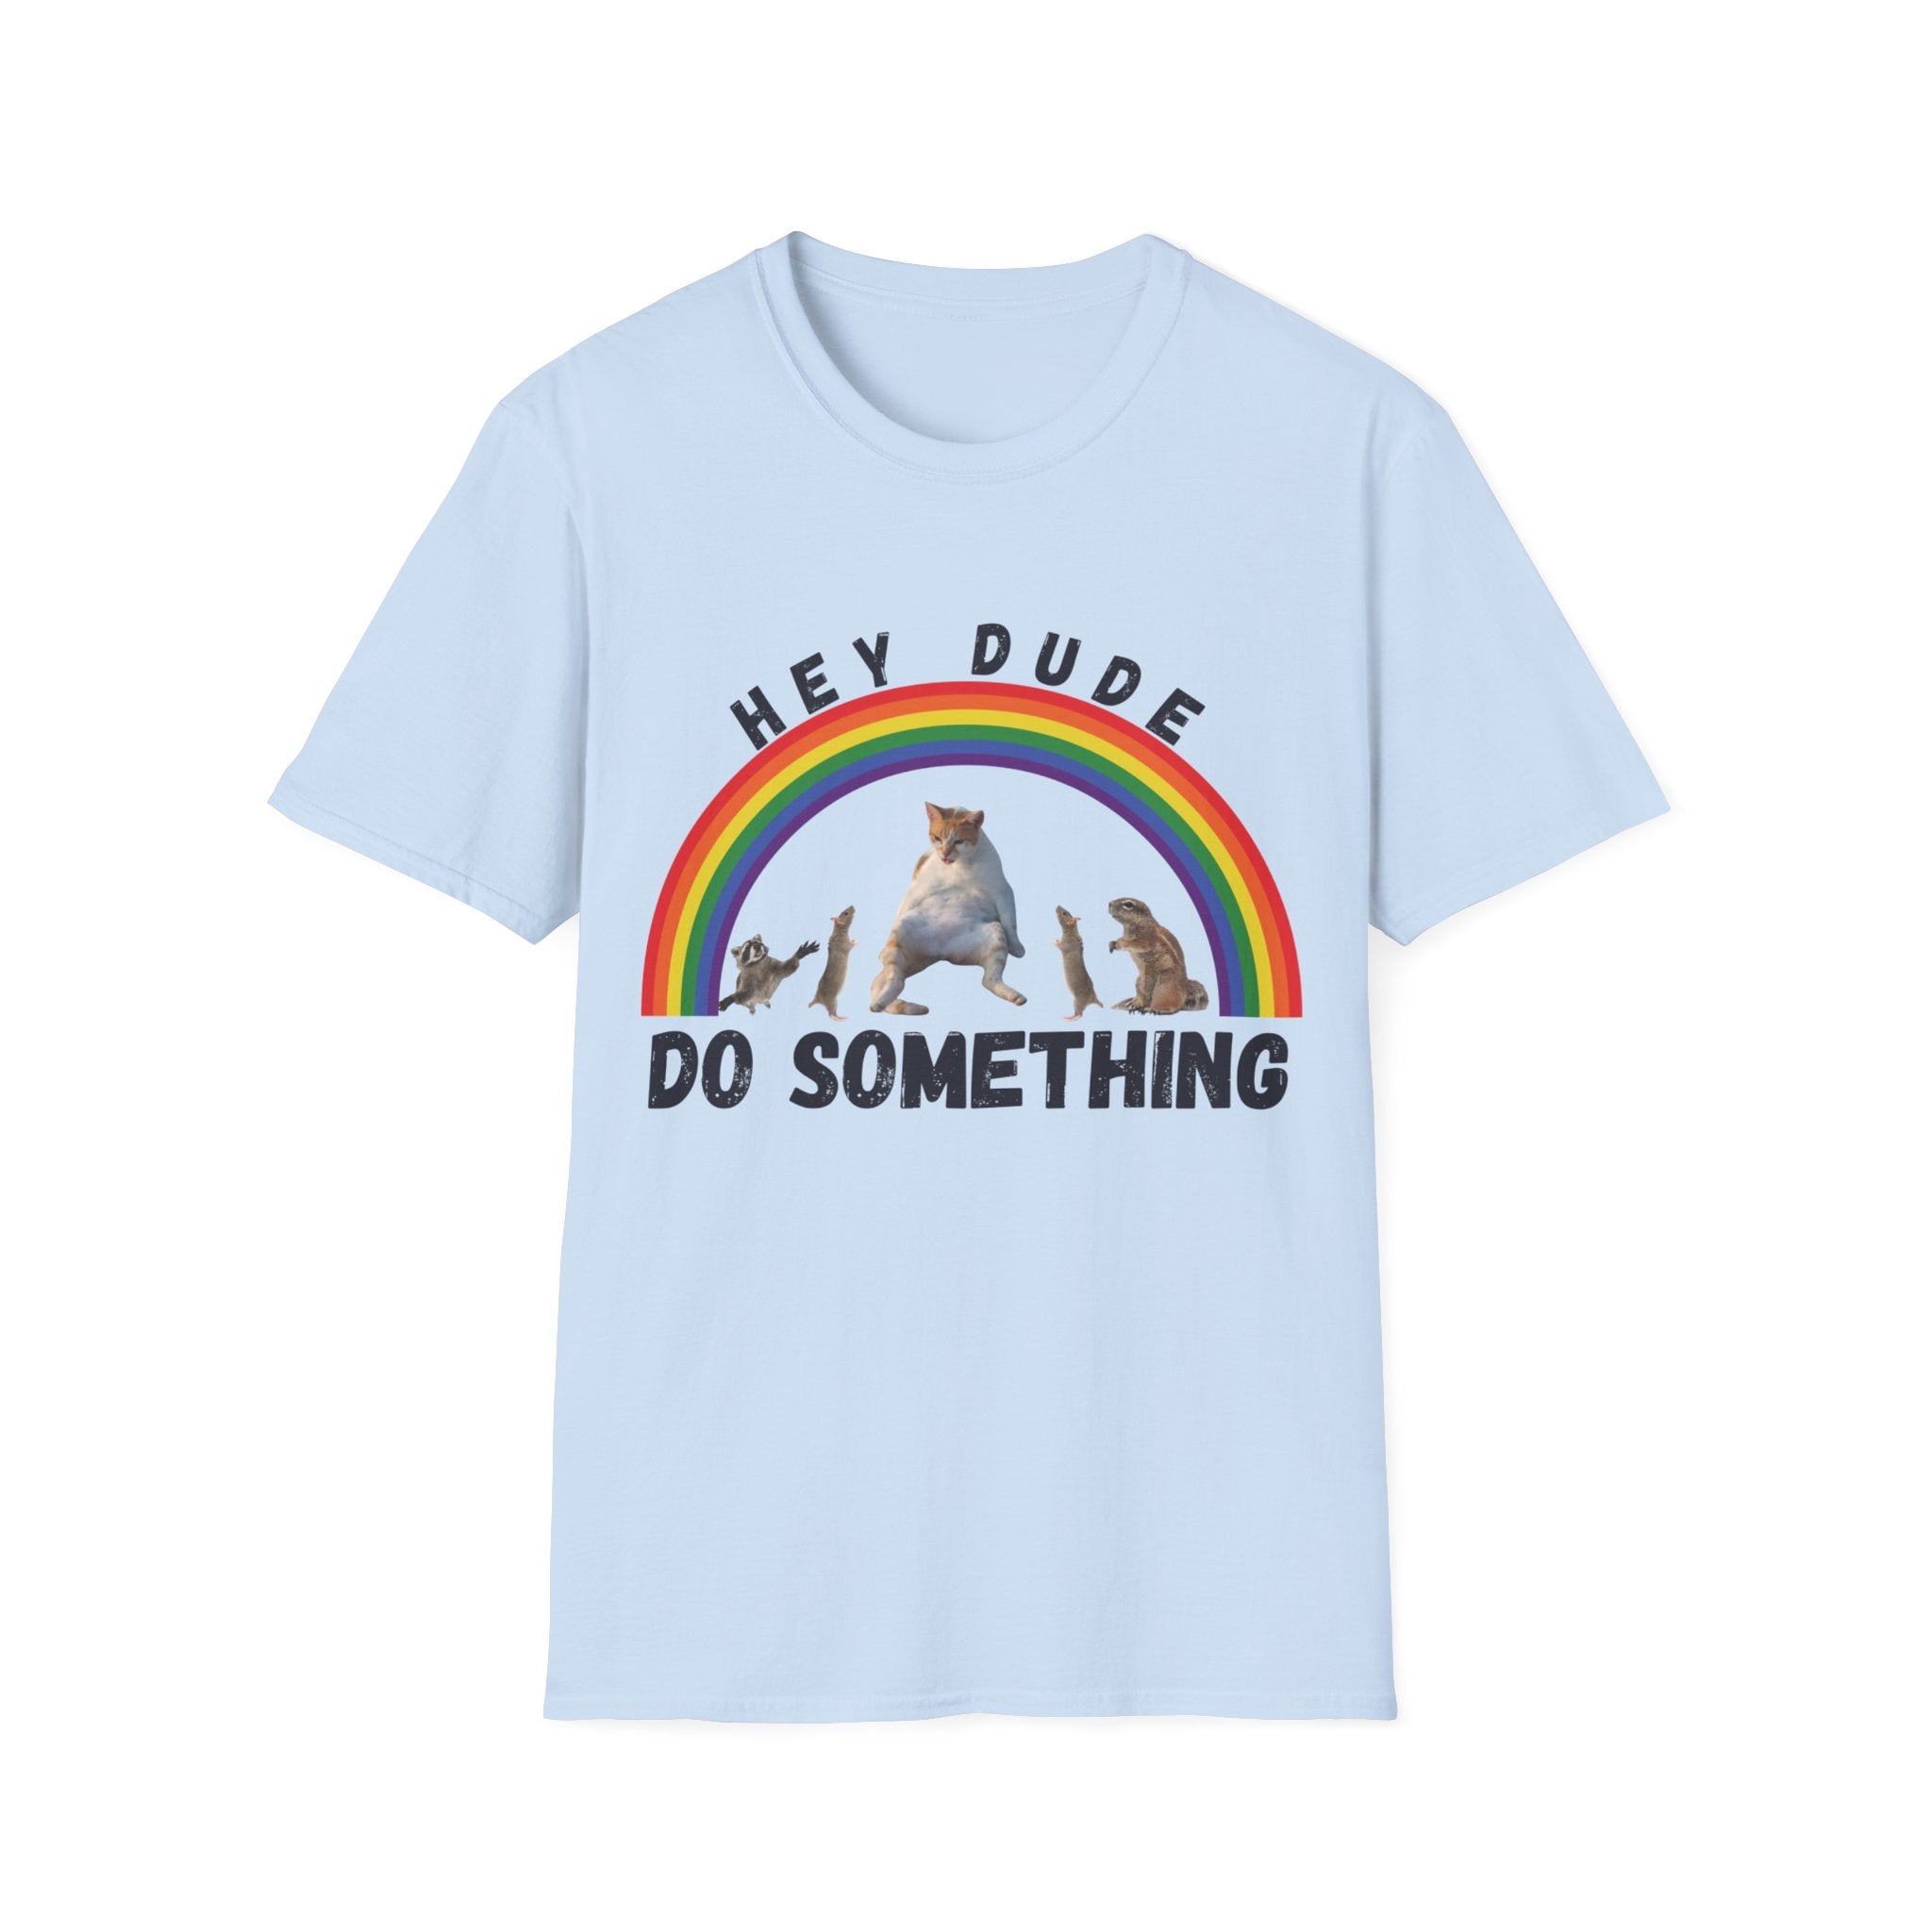 Hey Dude Funny Unisex Softstyle T-Shirt, Gift for Him, Gift for Boyfriend, Gift for Husband, Gift for Employees